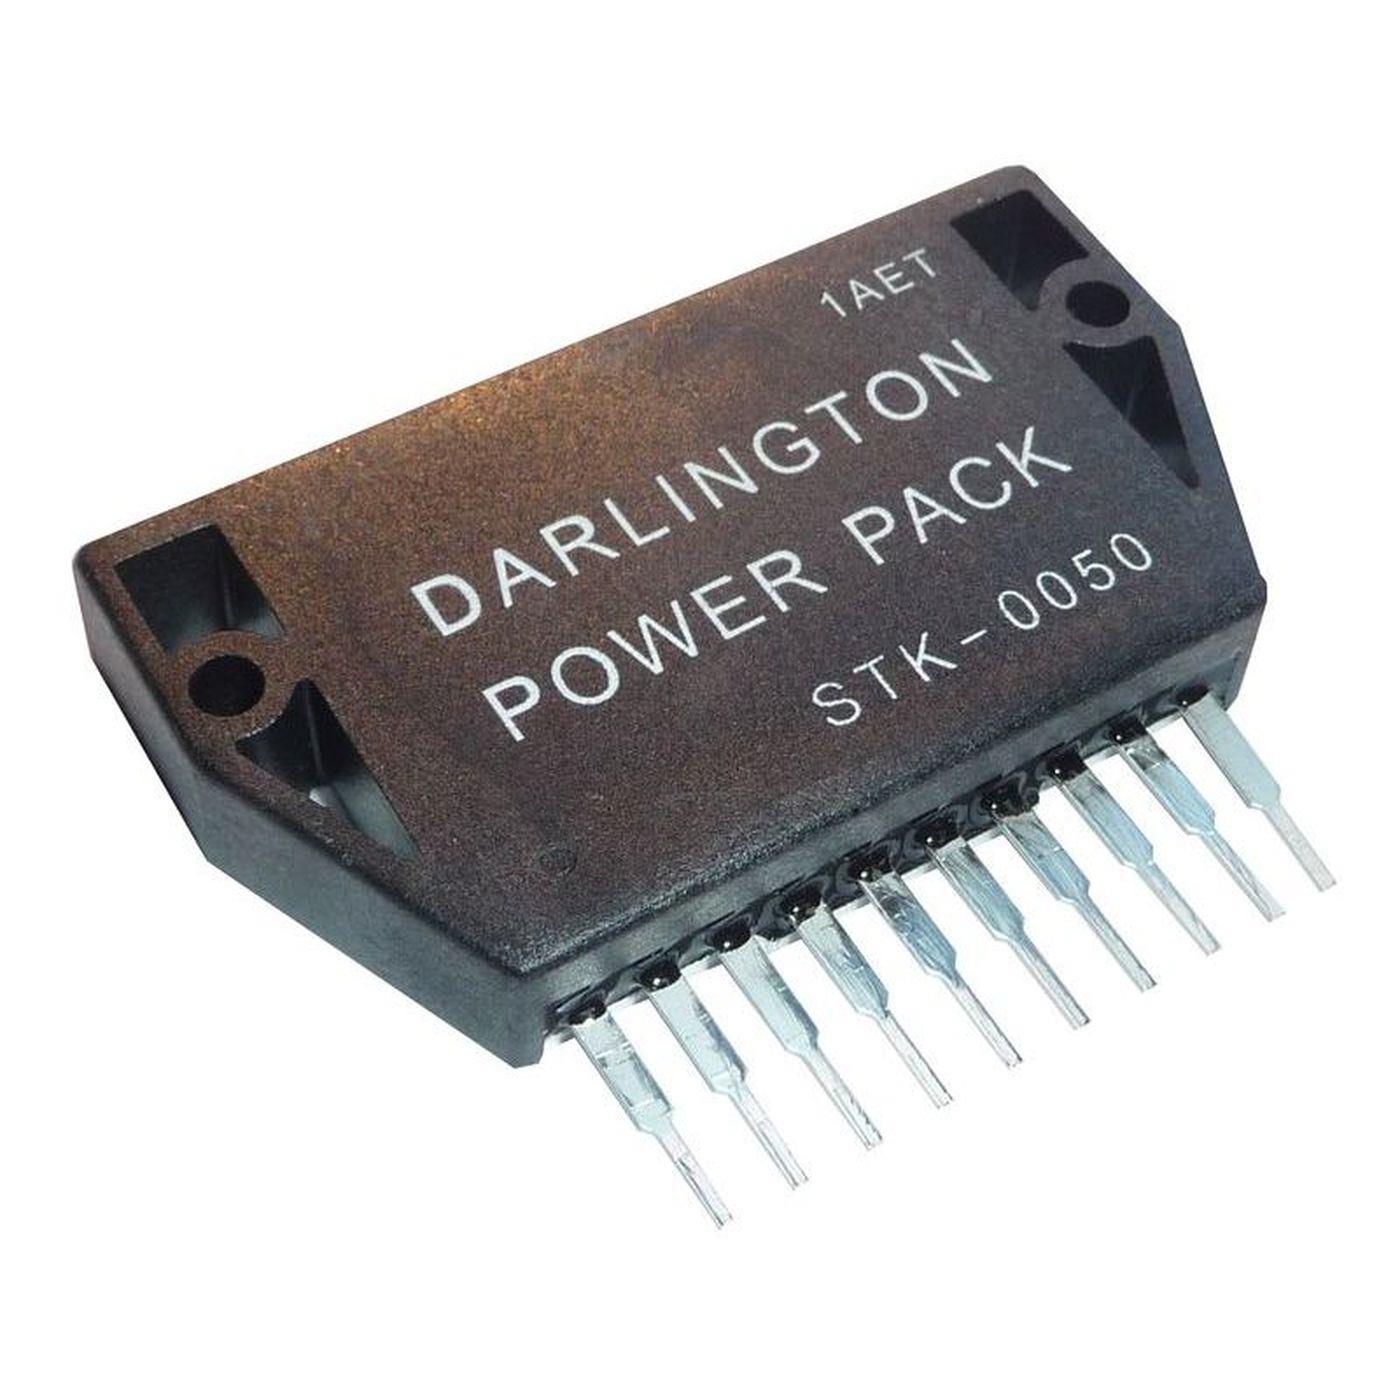 Hybrid IC STK0050 60x33mm Darlington Power Pack